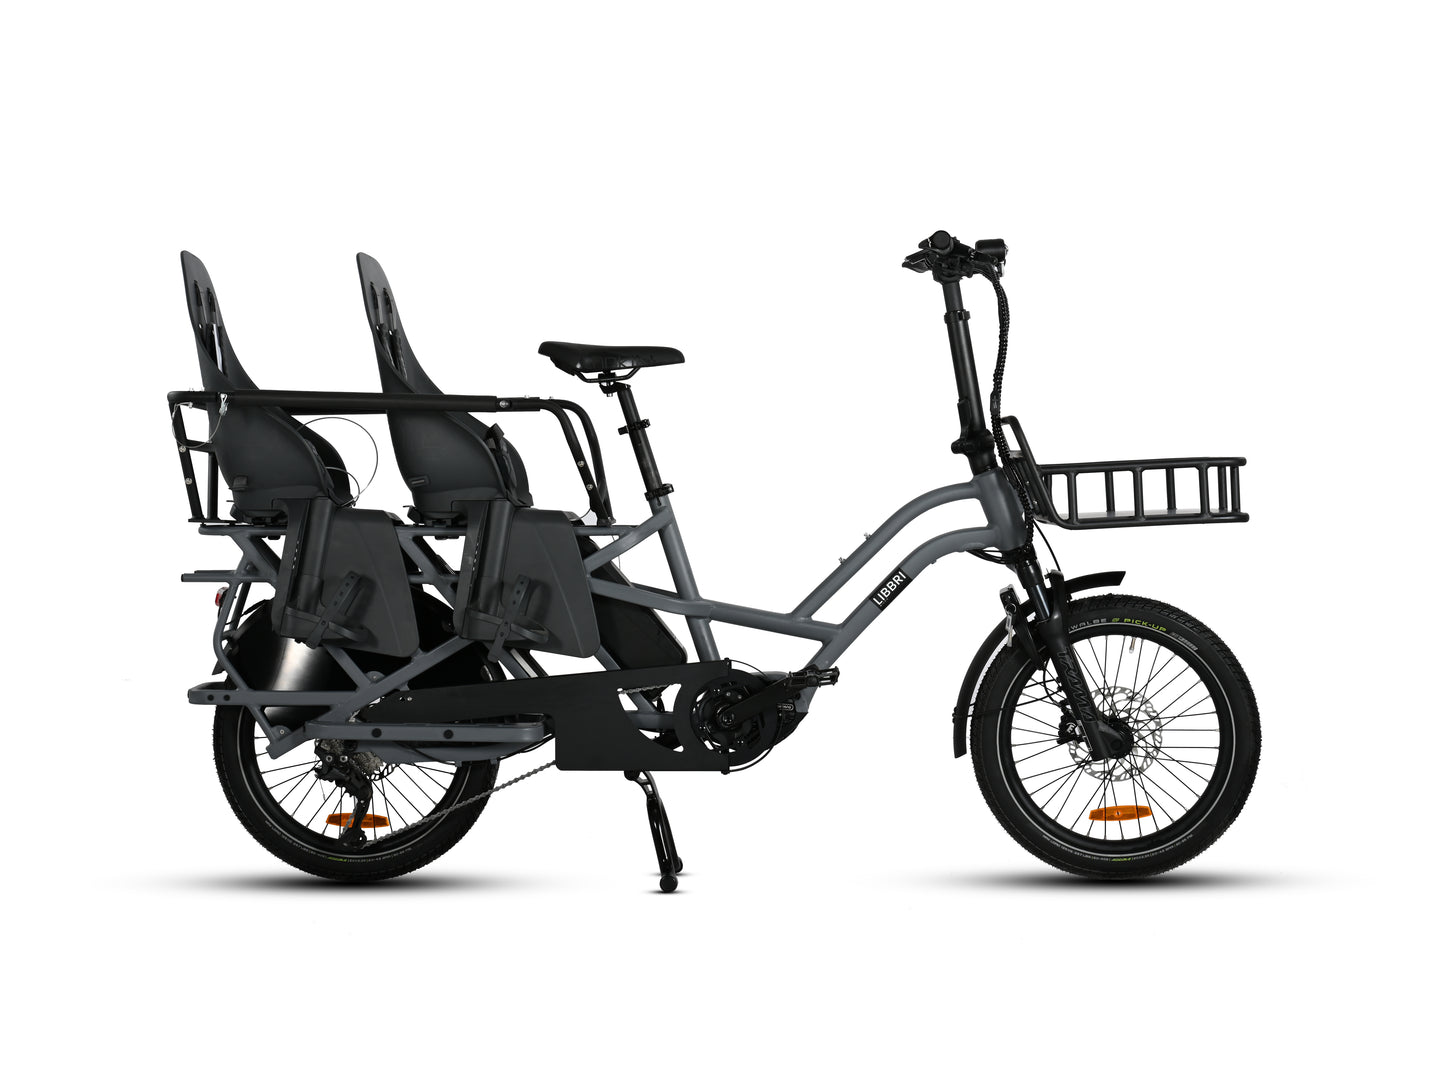 Libbri, the family cargo bike